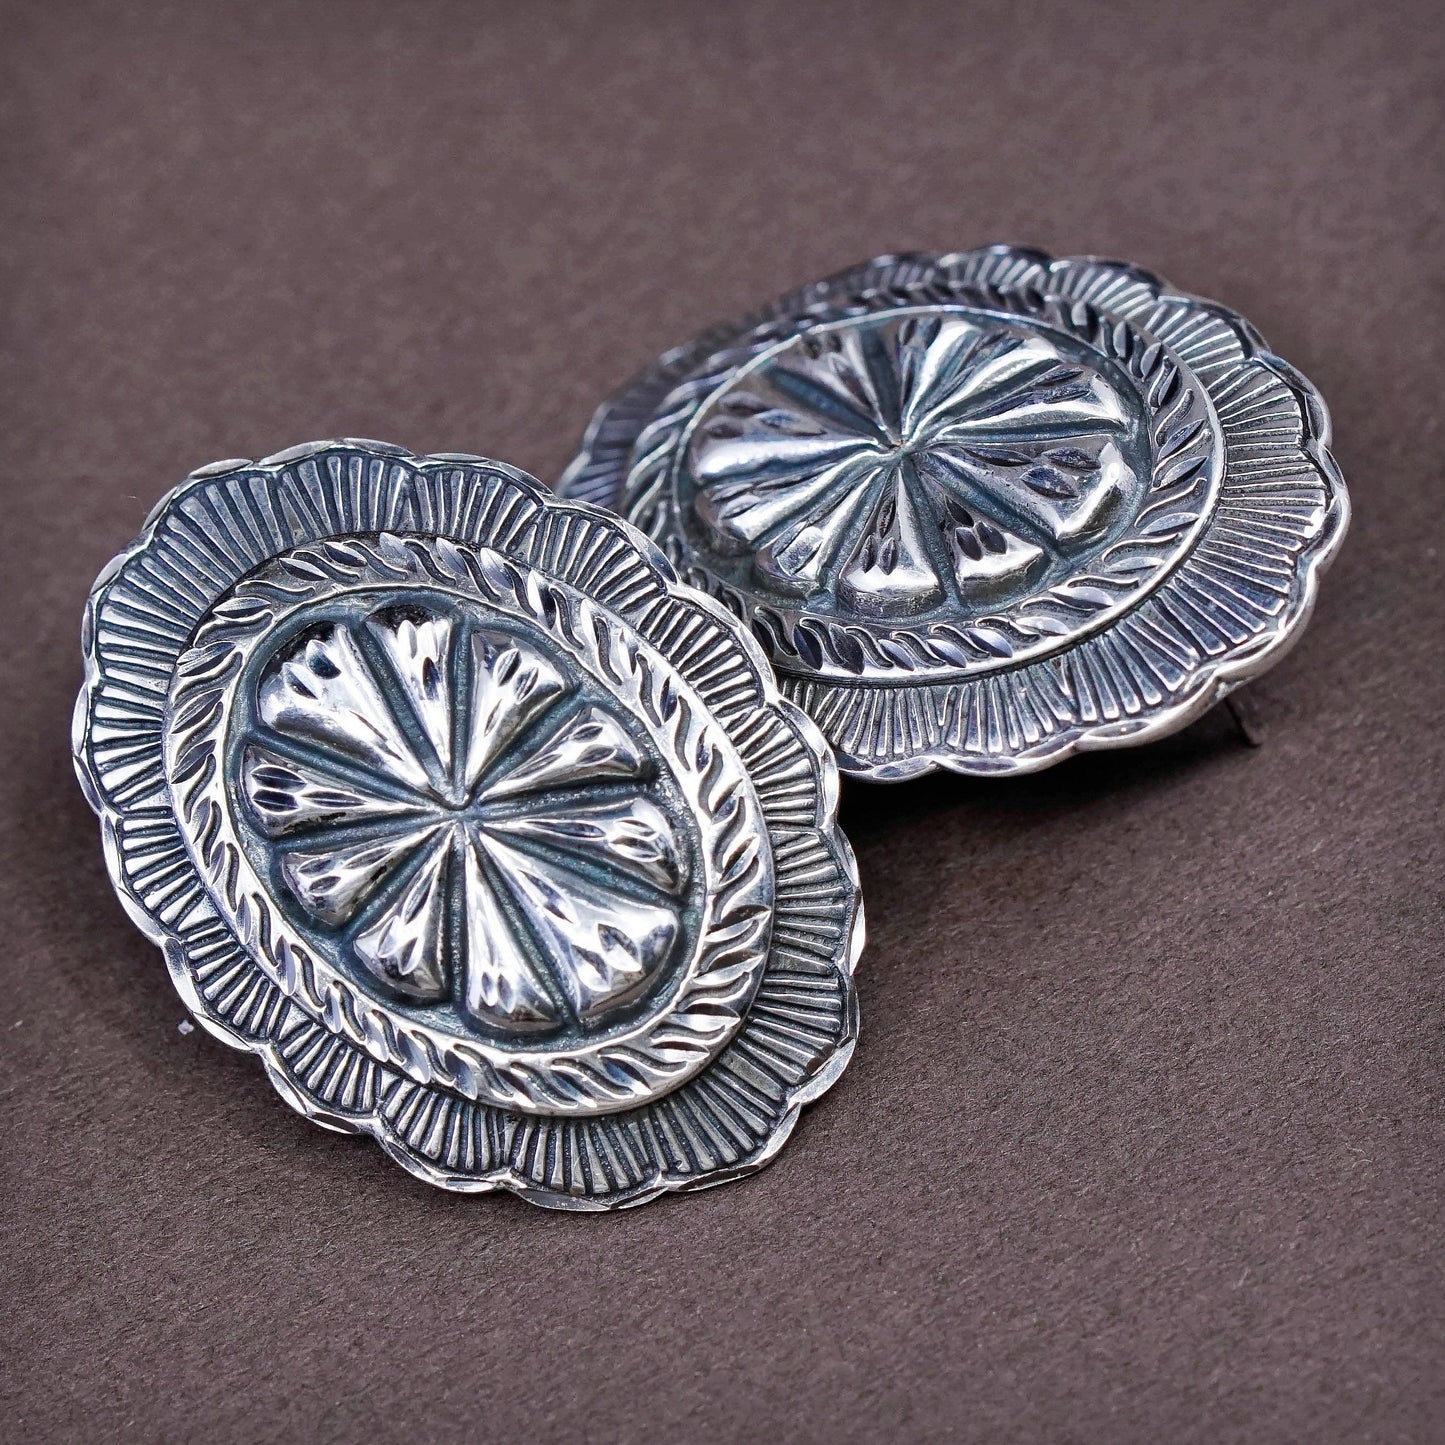 vtg Native American Navajo Sterling silver handmade earrings, jewelry 925 studs